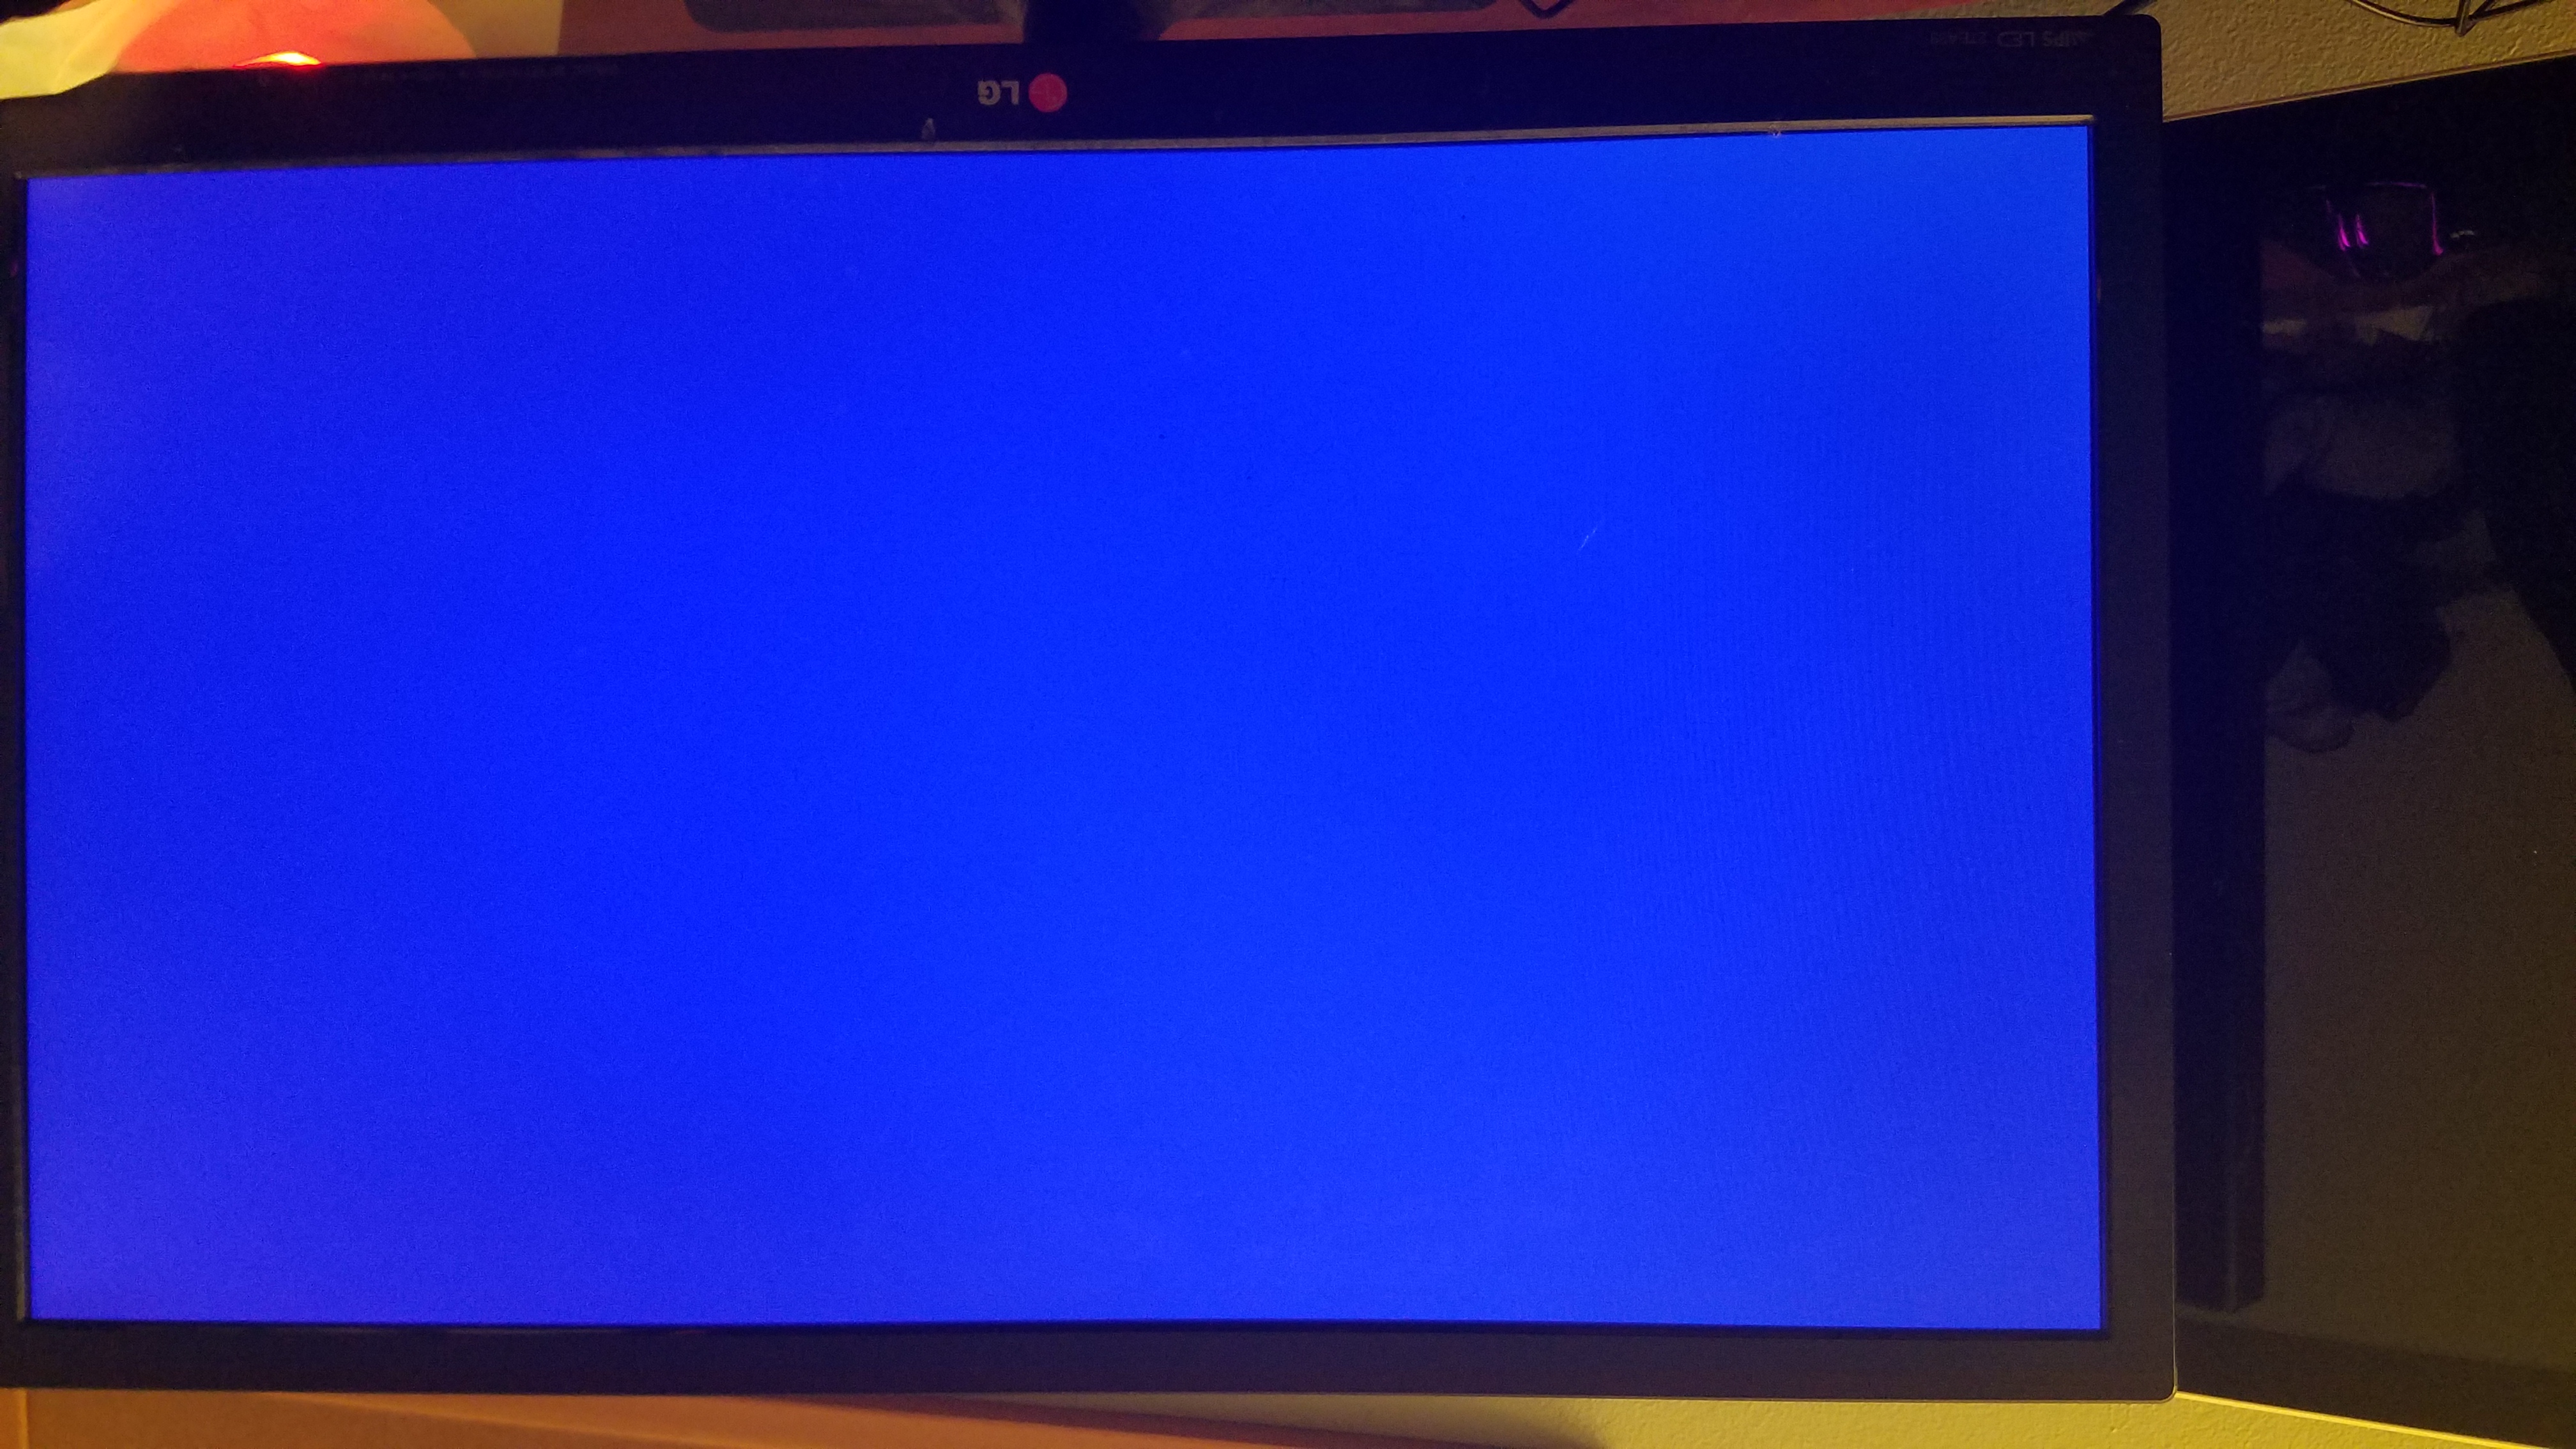 Why am I getting blank screen from my win10 install USB? - Microsoft Community